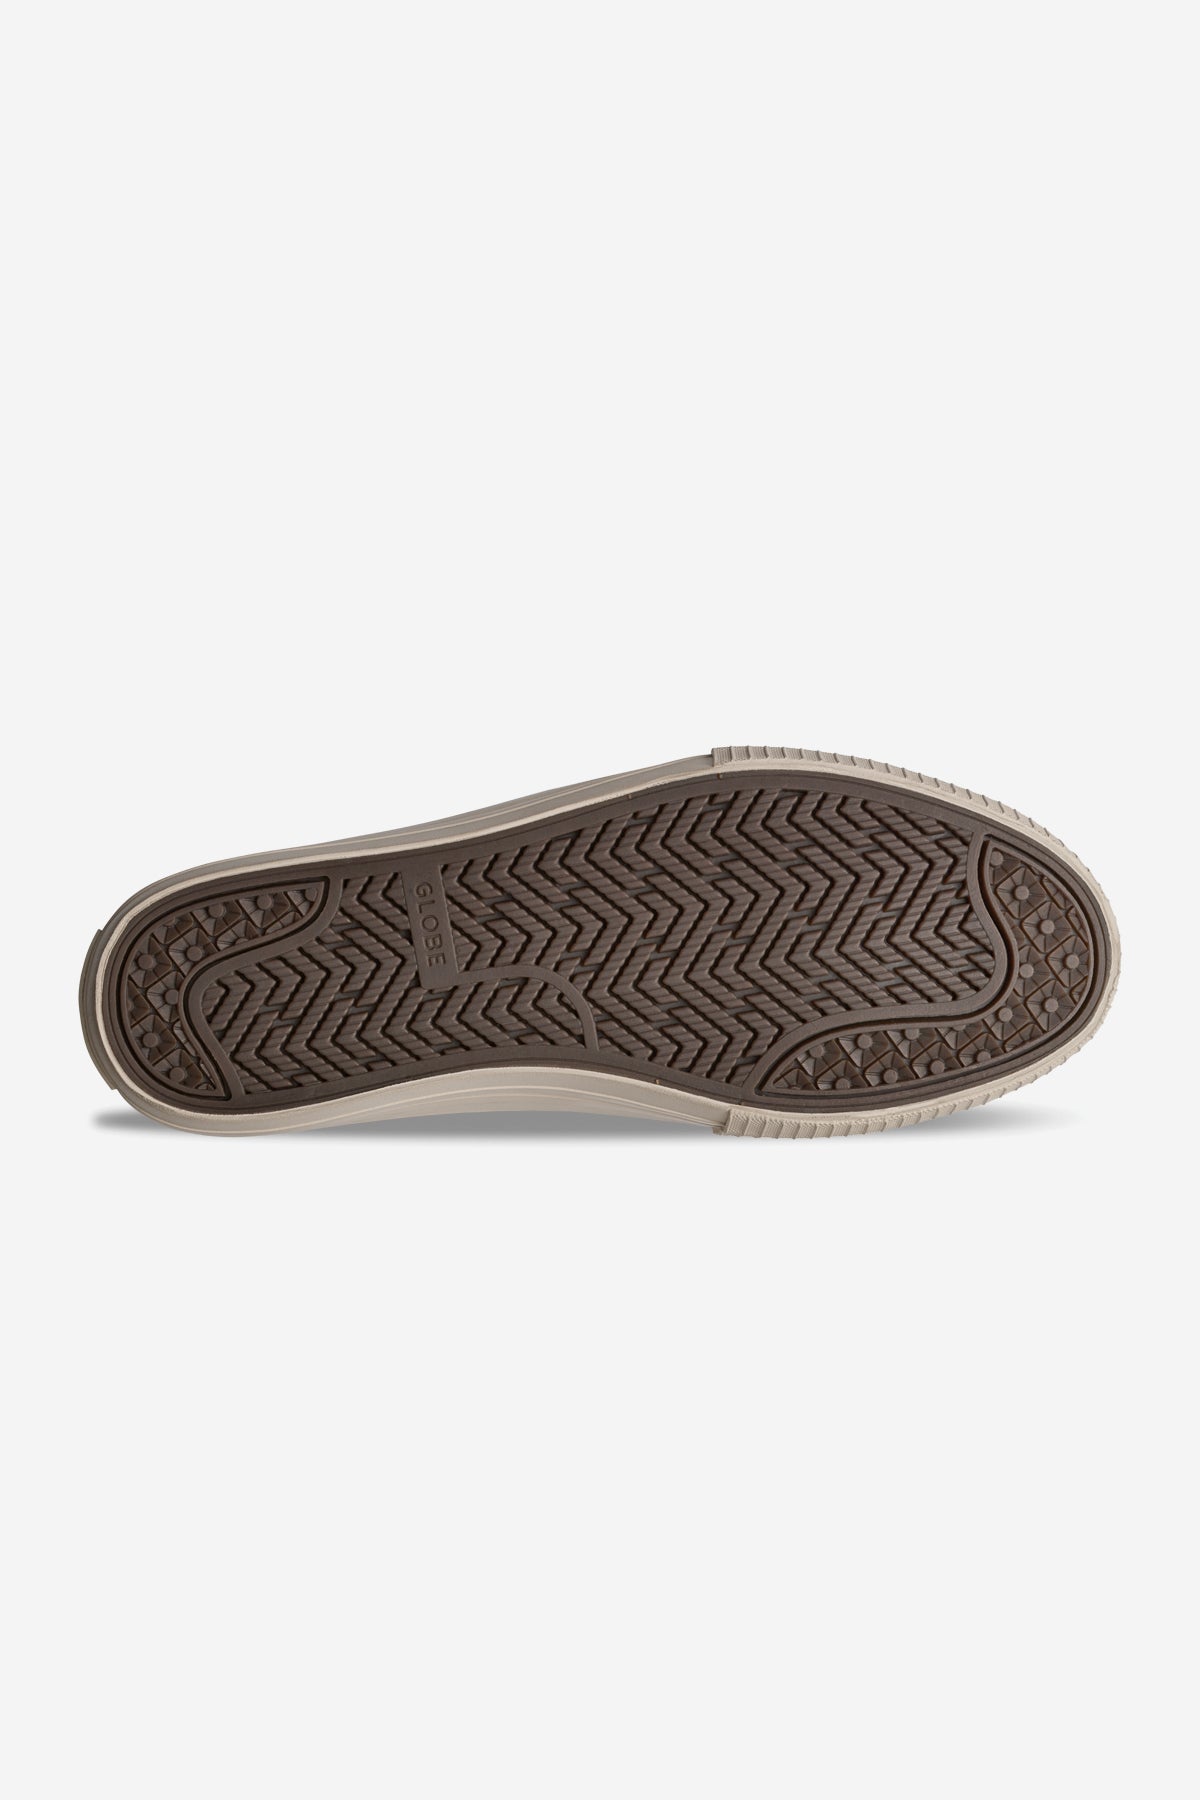 Globe - Gillette - Olive/Crema - skateboard Scarpe